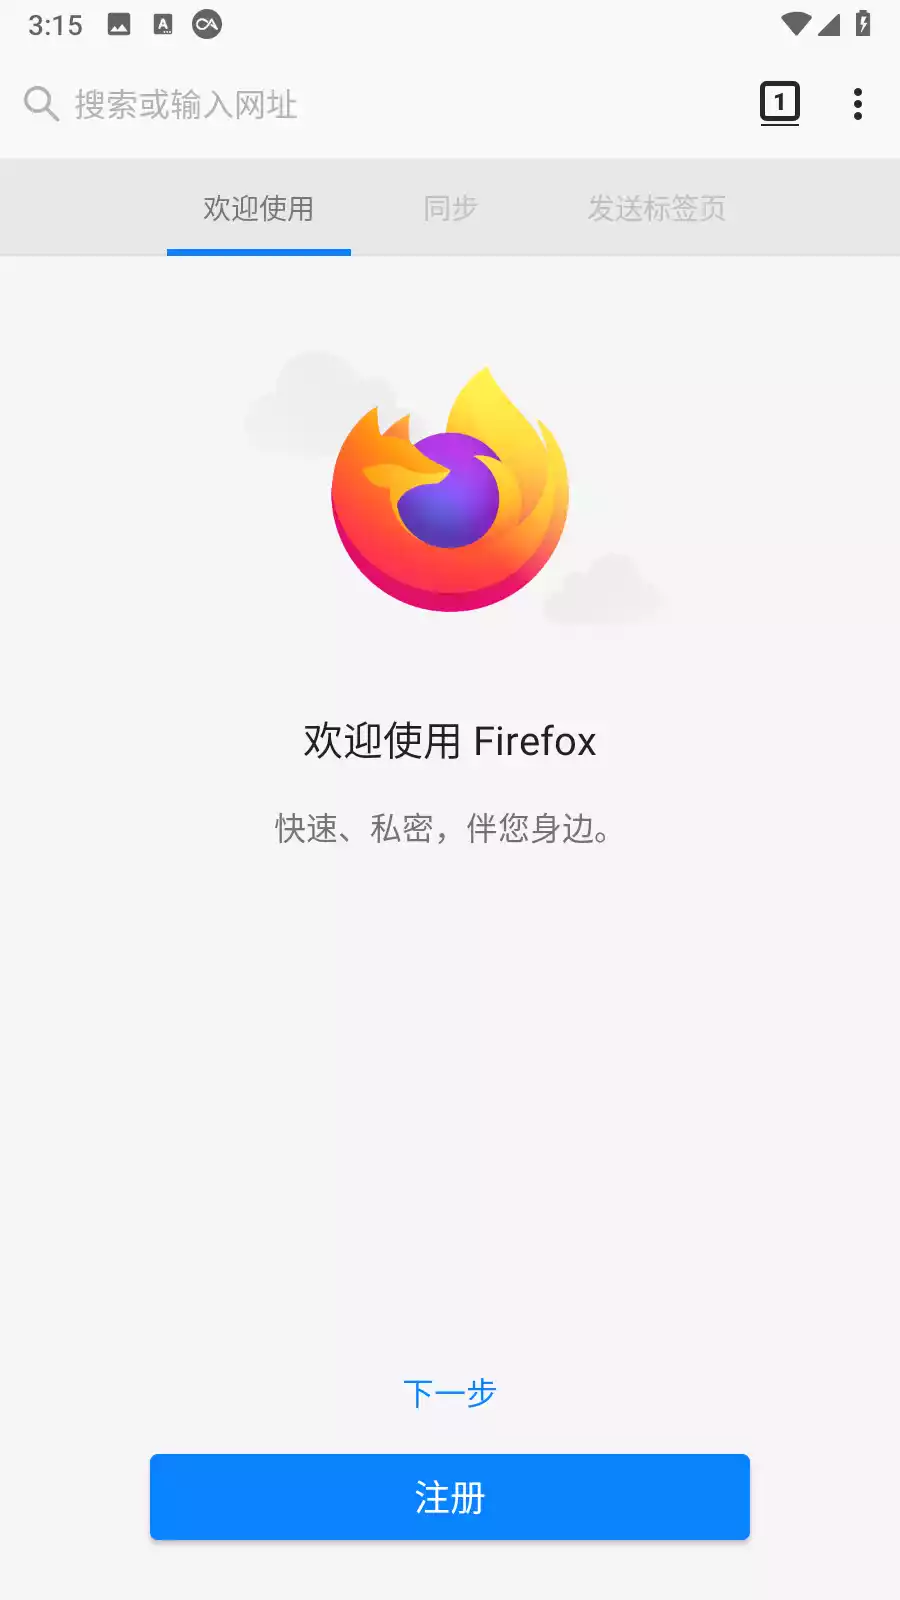 Firefox火狐浏览器插件版